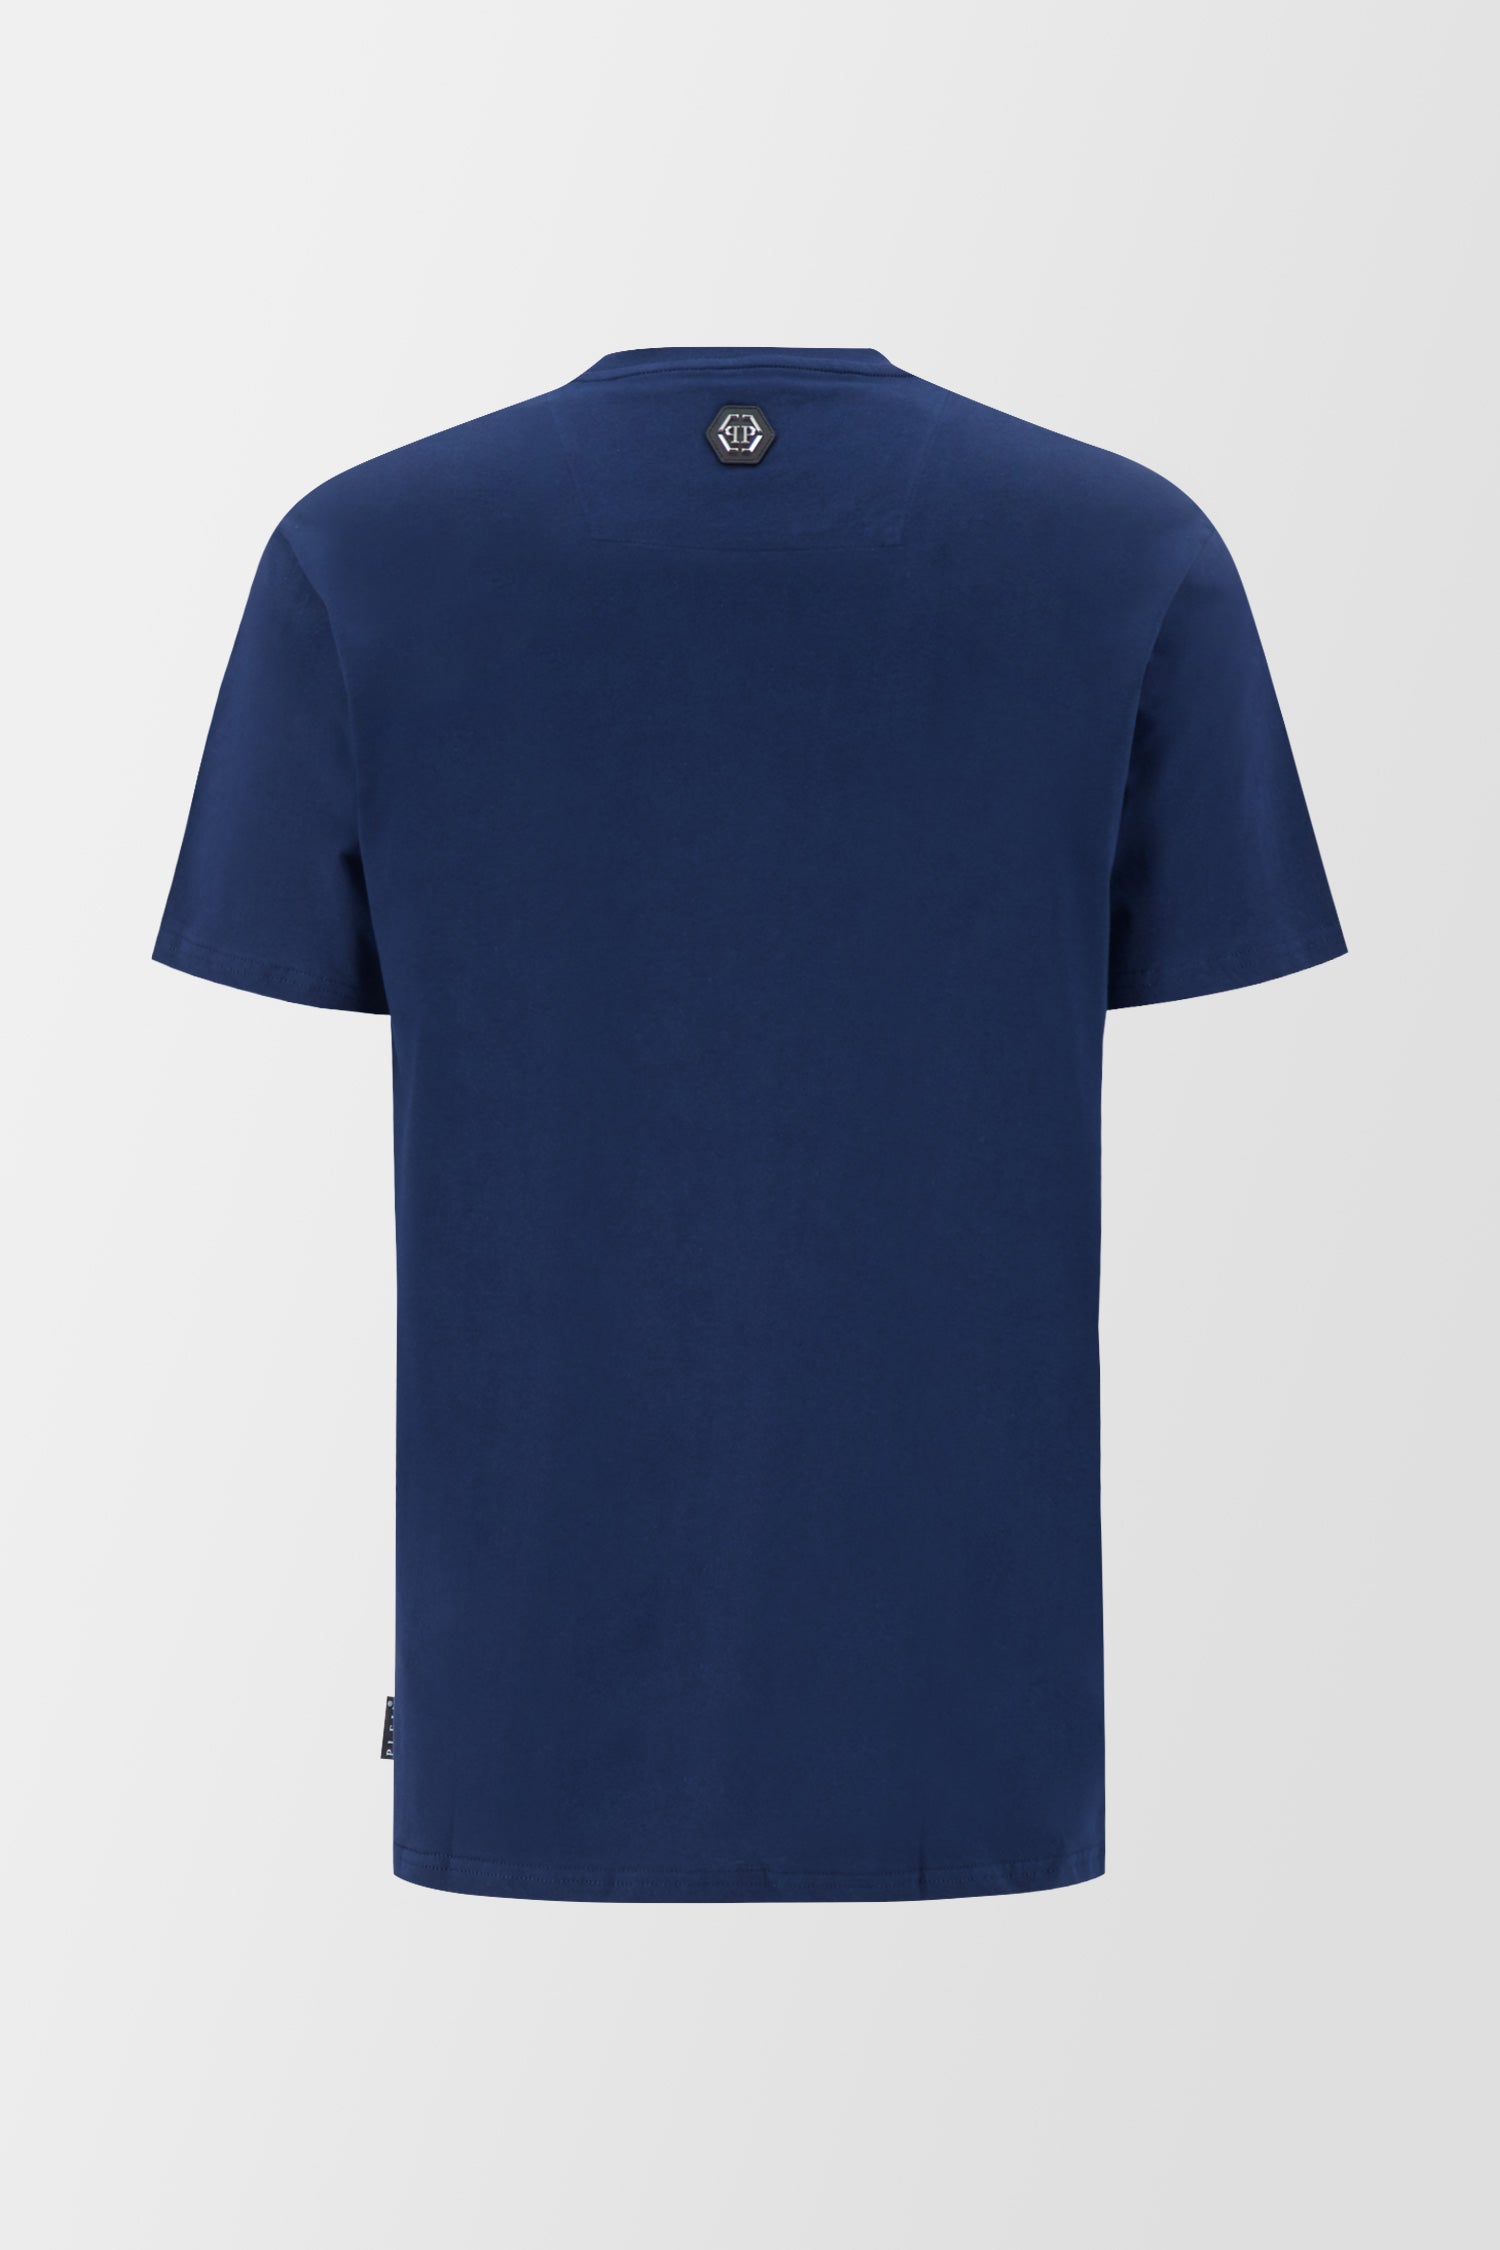 Philipp Plein Navy Monster T-Shirt